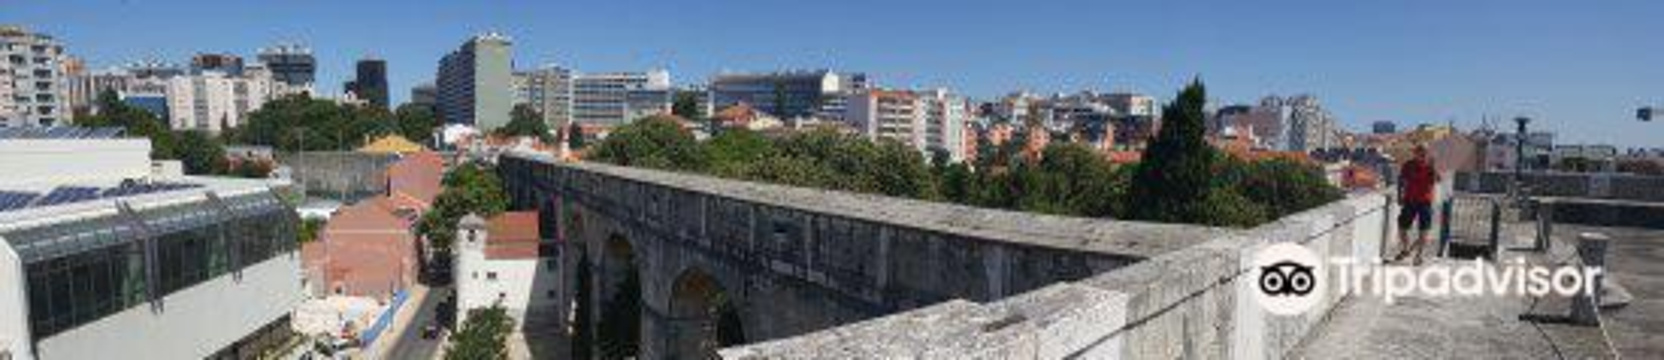 Mae de Agua Lisbon Aqueduct and Water Museum旅游景点图片